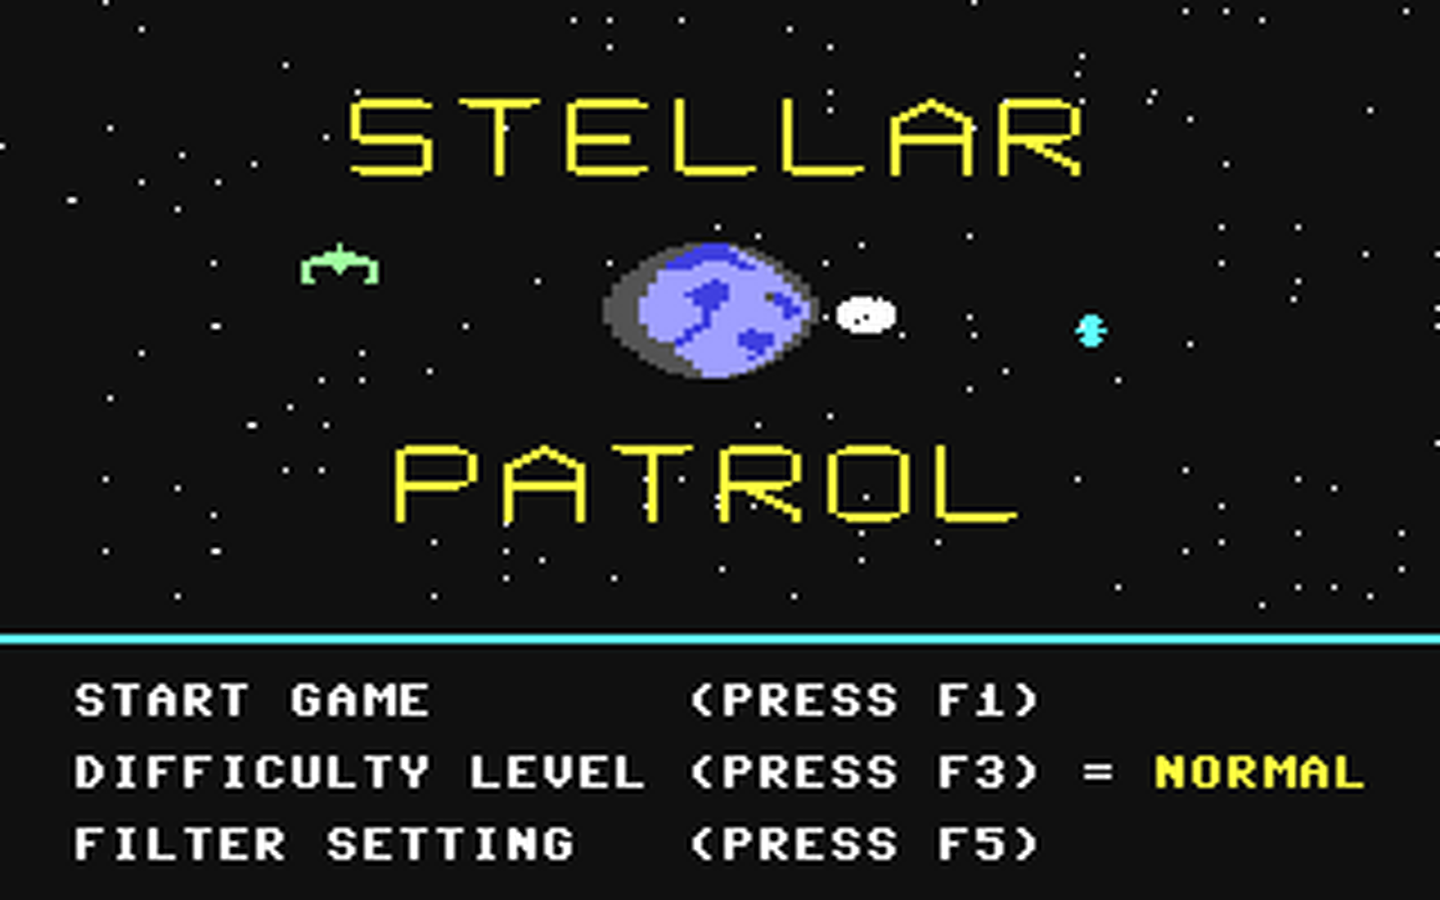 C64 GameBase Stellar_Patrol Main_Street_Publishing,_Inc. 1986